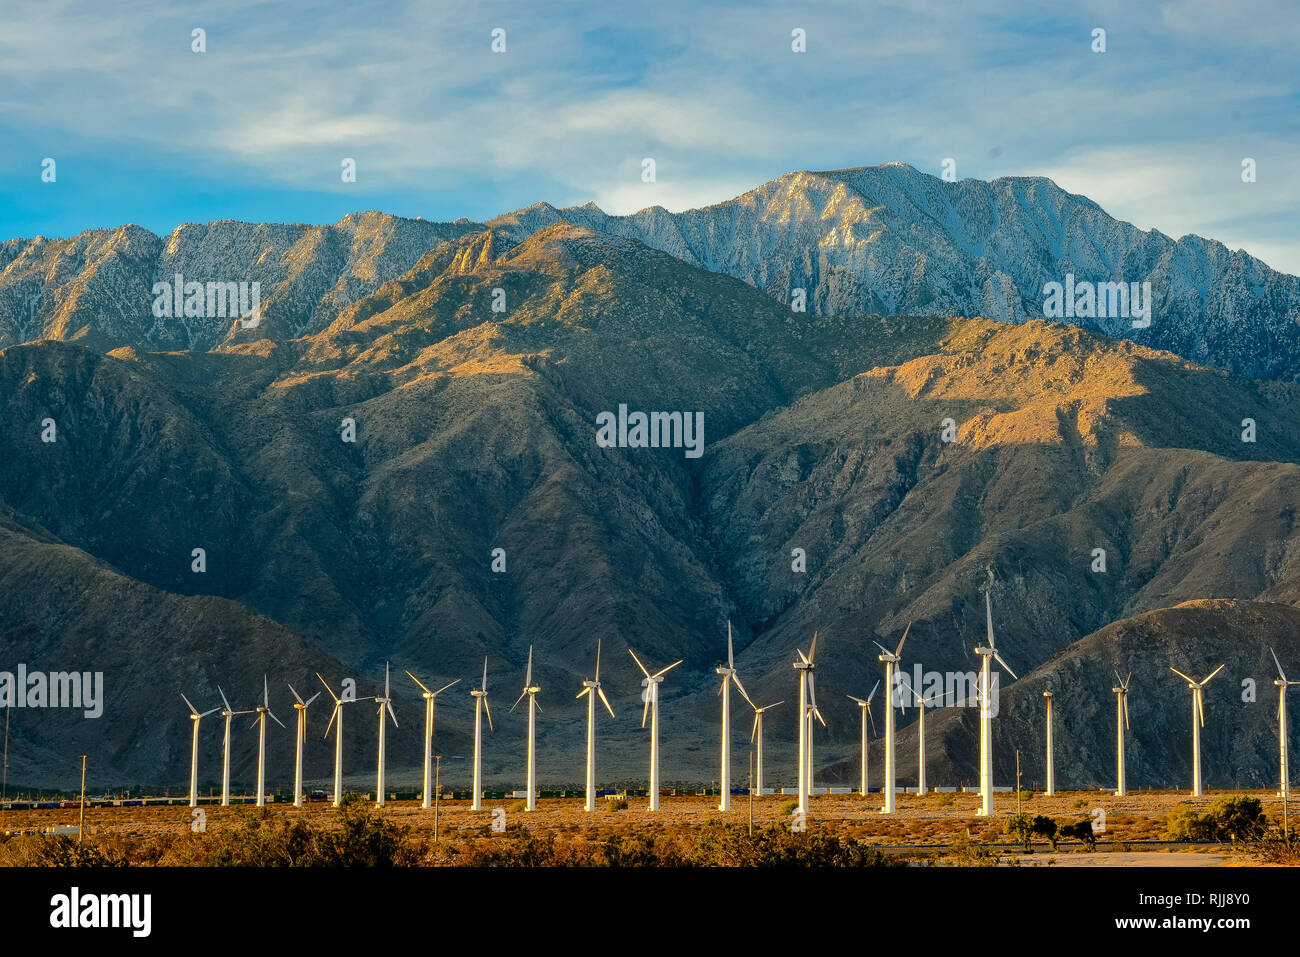 Large wind farm in desert area Stock Photo